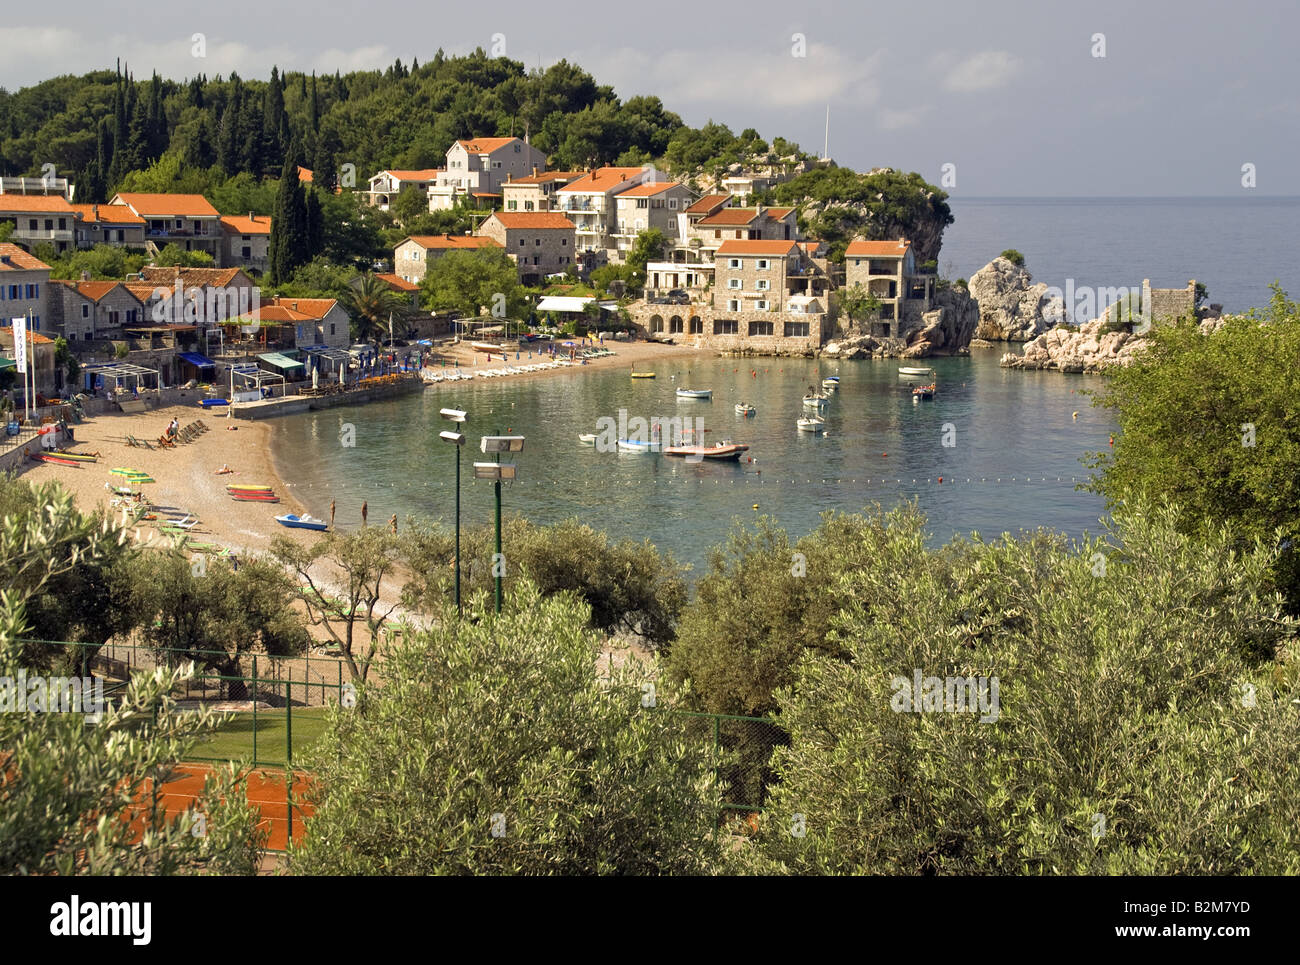 Maestral Resort and Casino on Budva Riviera of Adriatic Sea Stock Photo